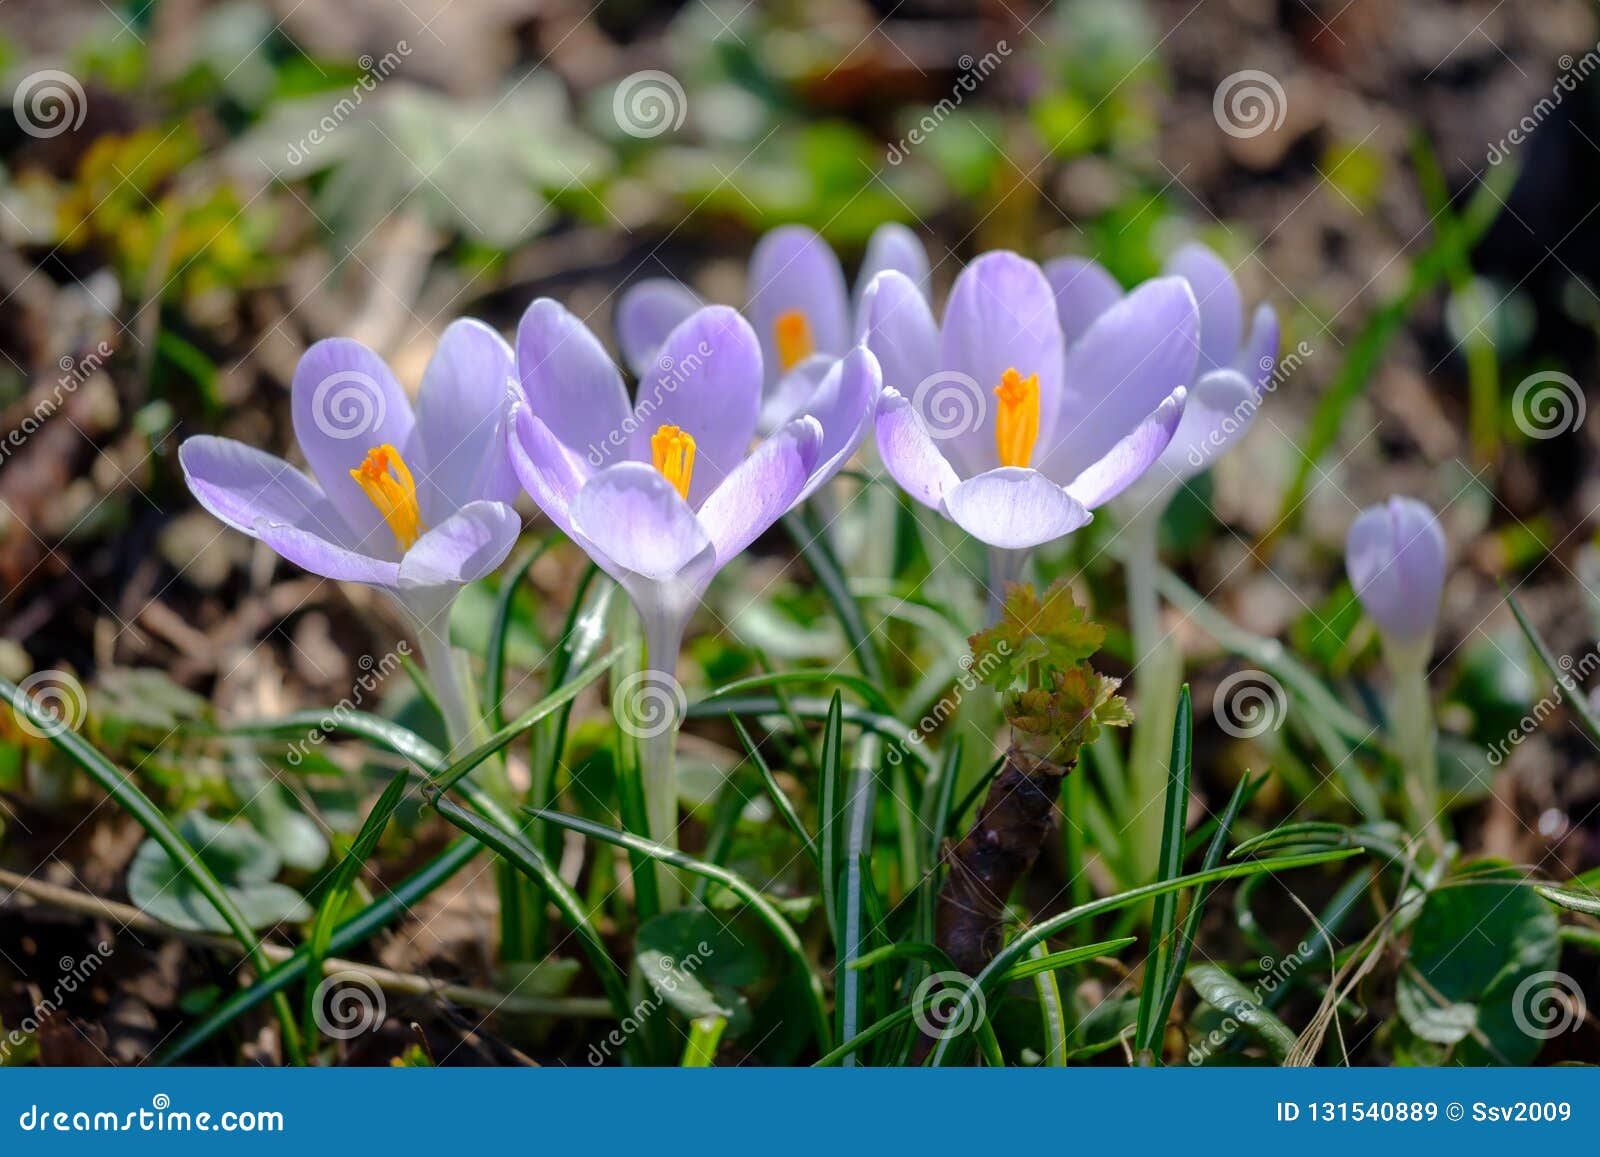 flowering violet crocuses under bright sunlight in early spring forest